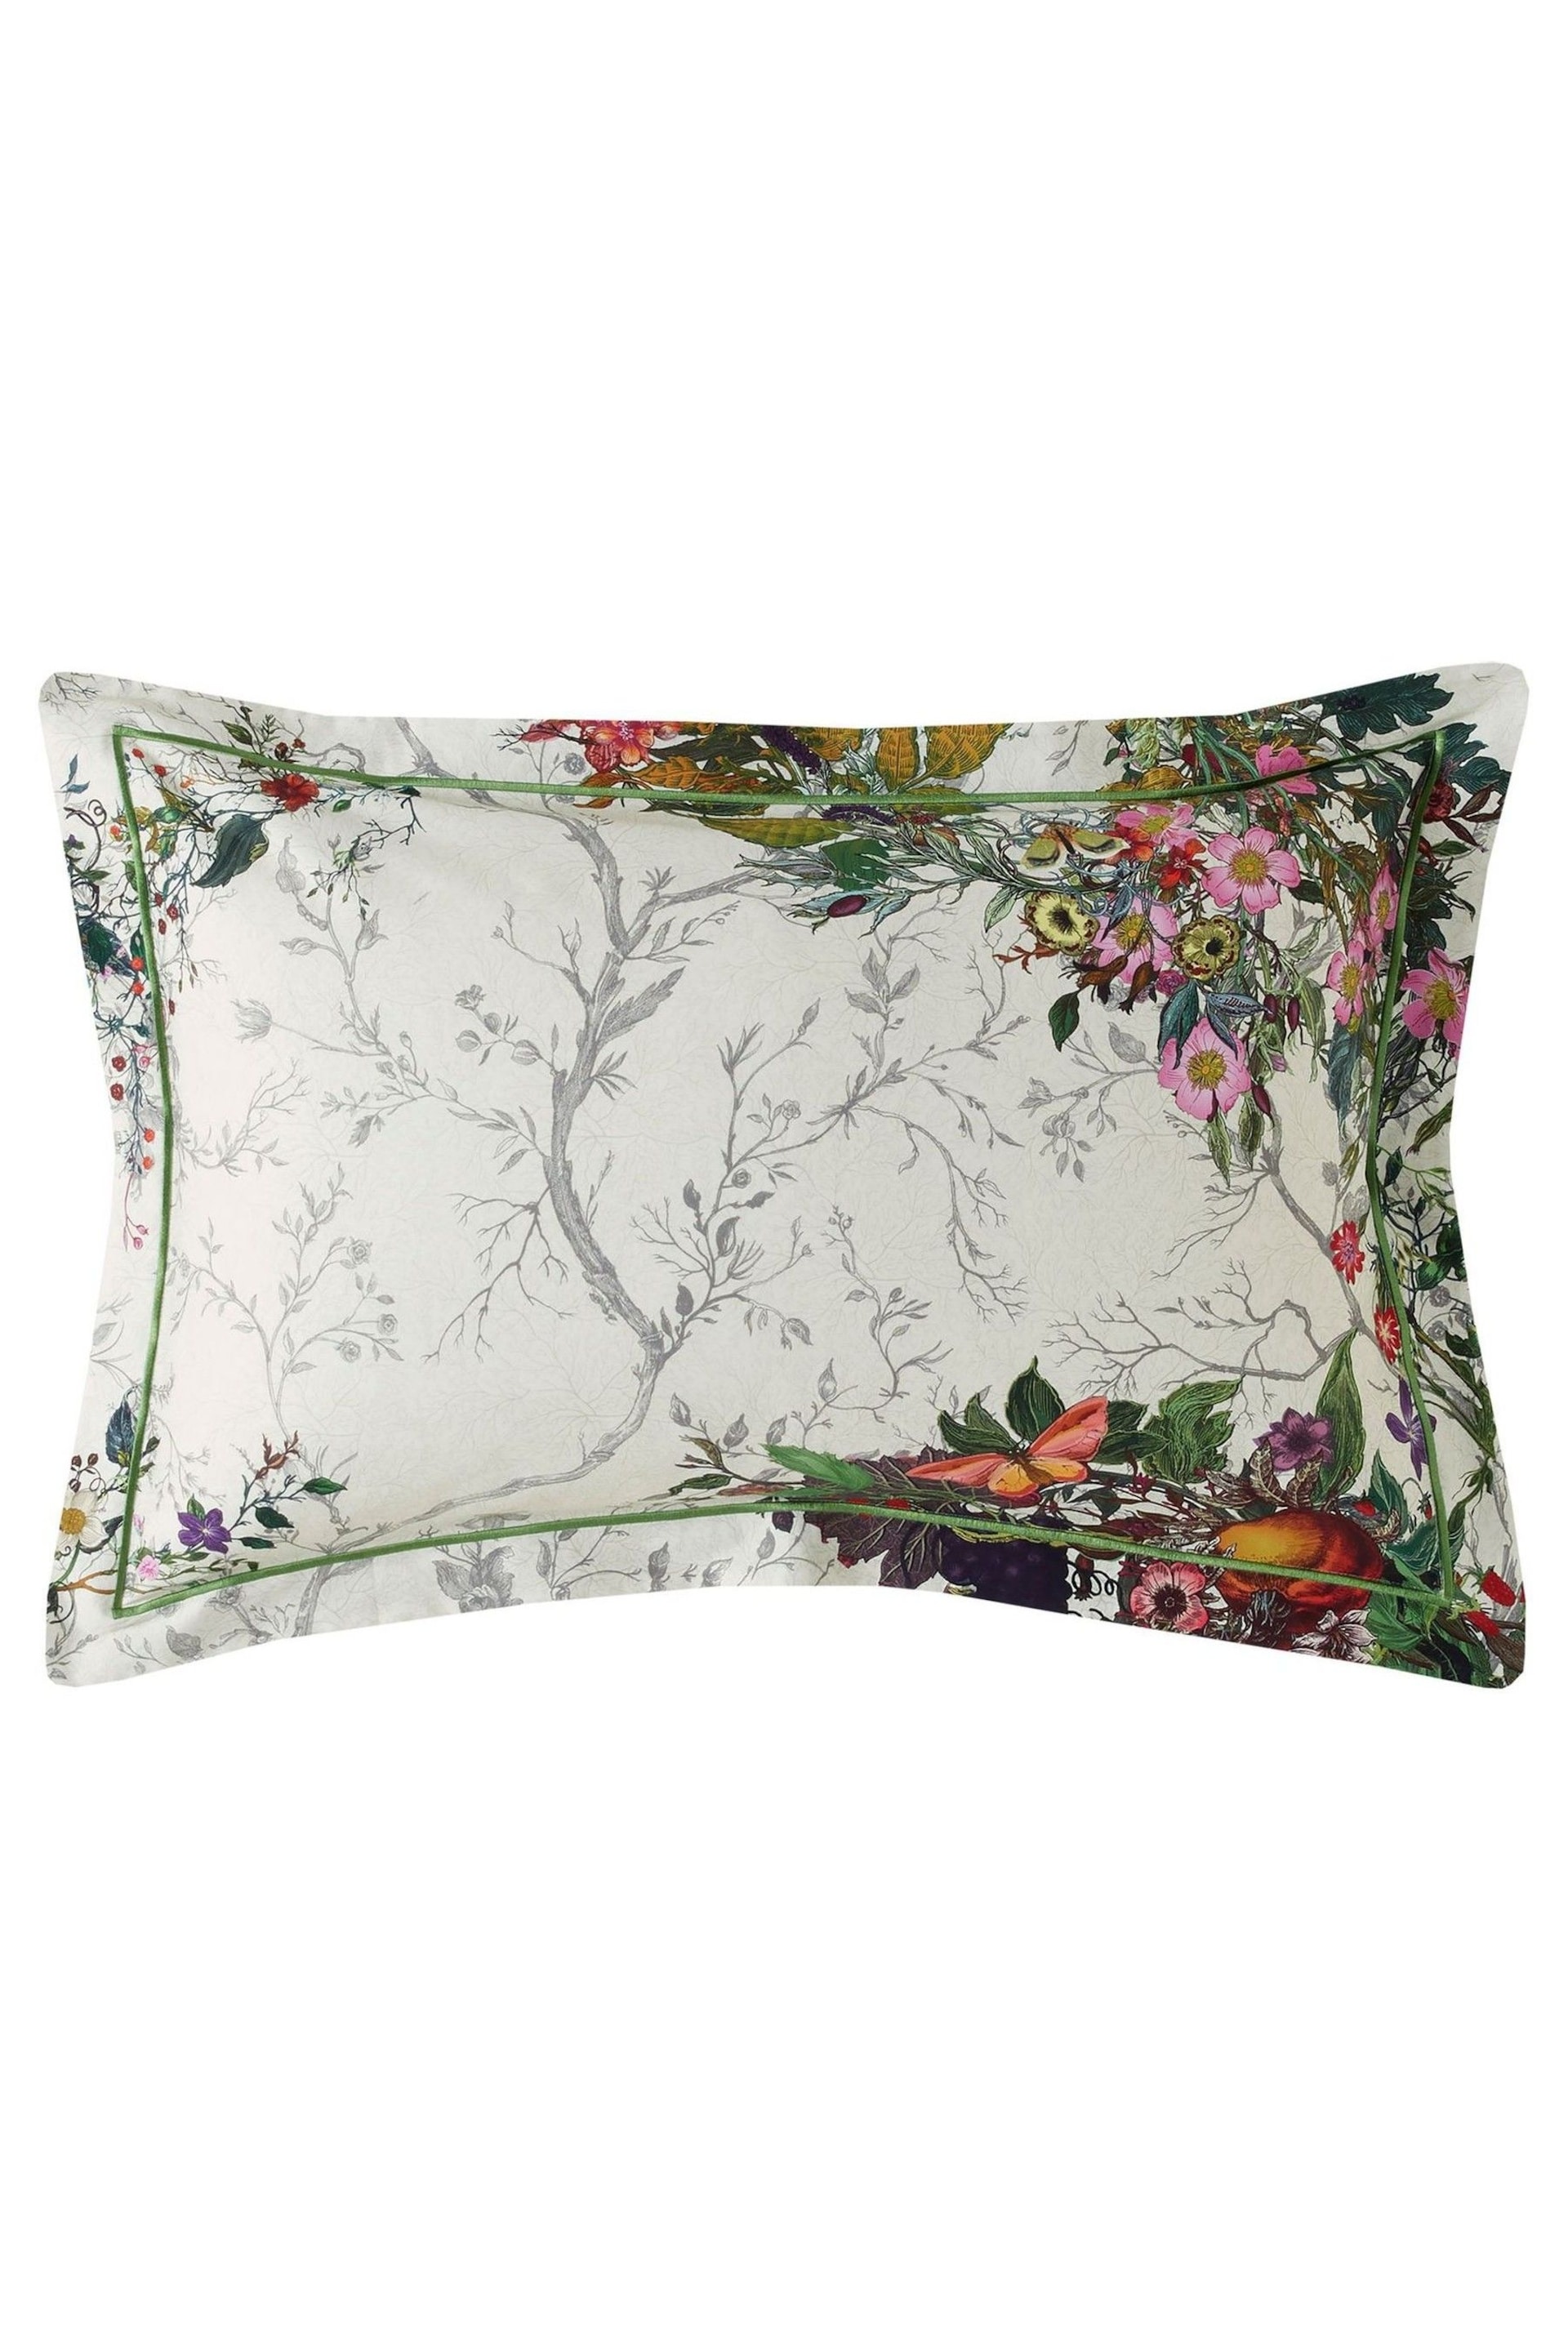 Timorous Beasties Dove Bloomsbury Garden Pillowcases Set Of 2 - Image 4 of 4